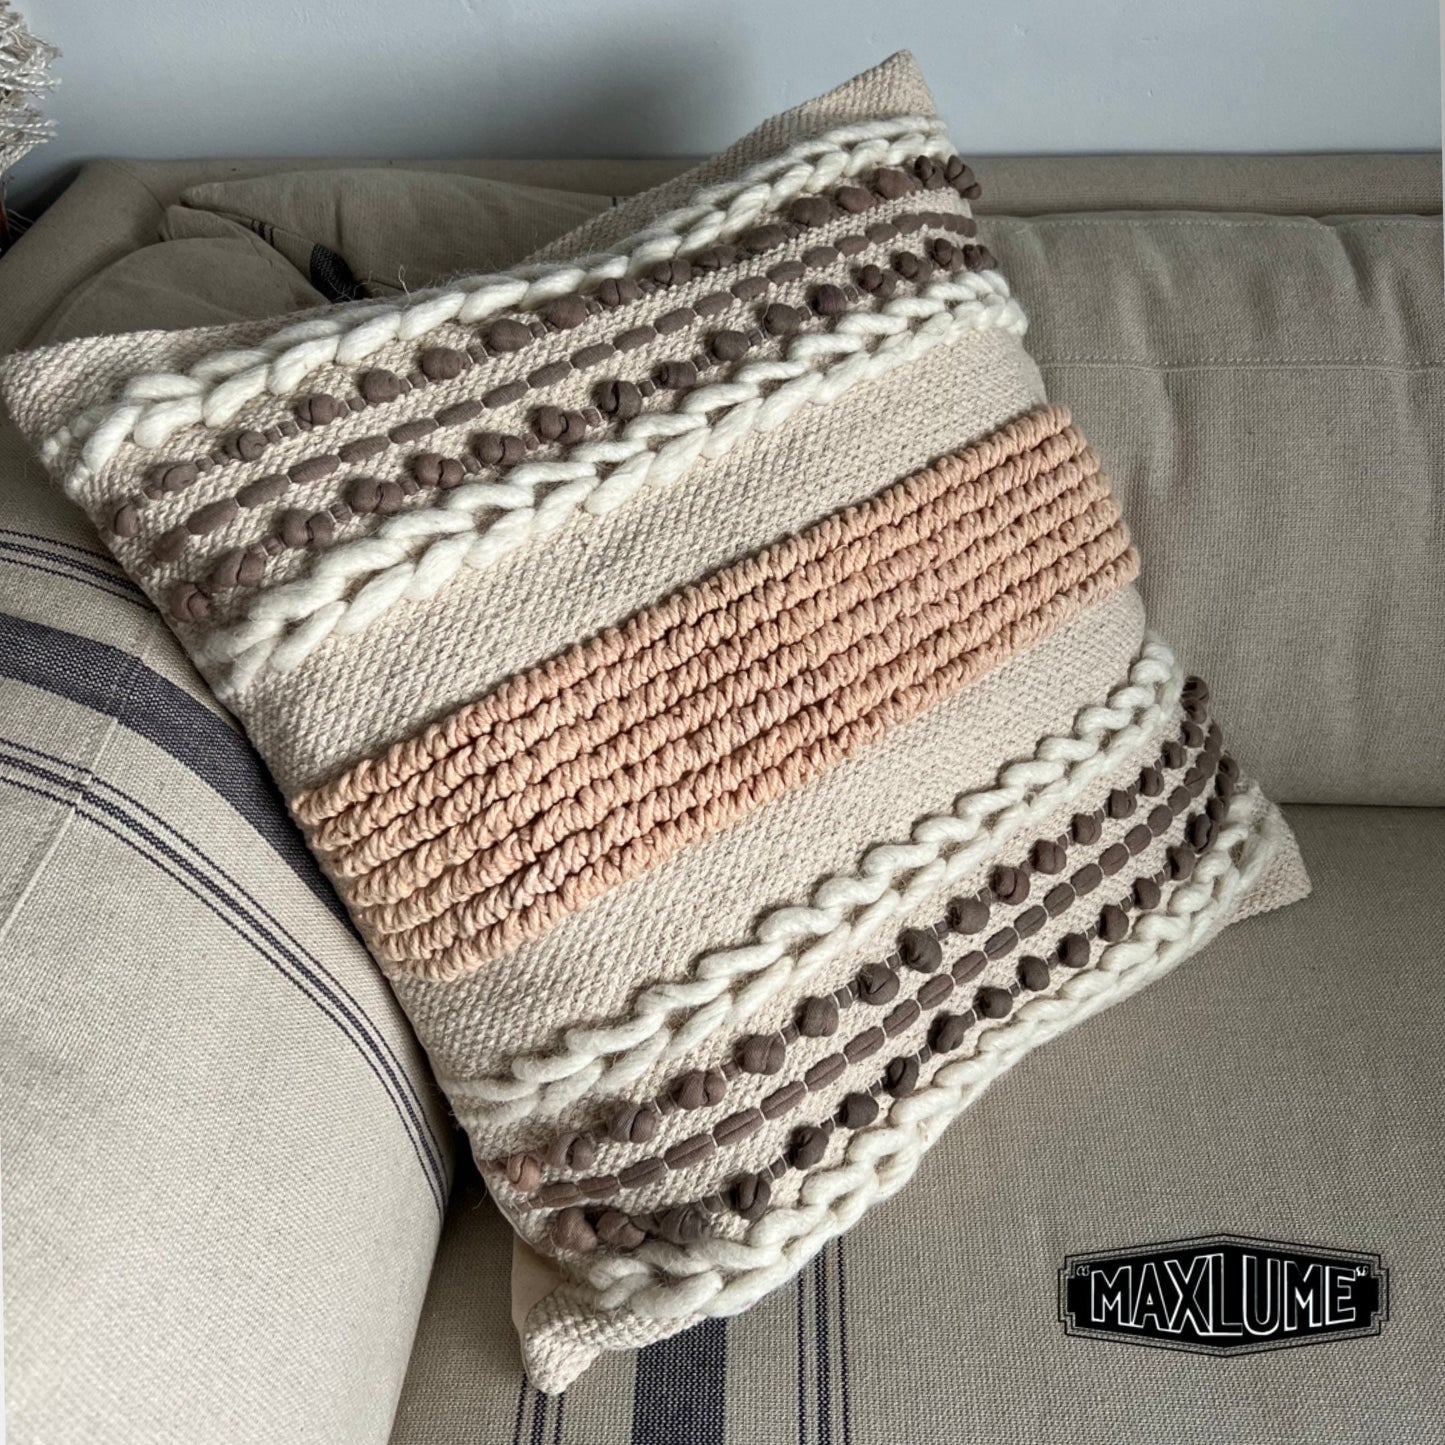 Maxlume ~ 18x18 Plaited Cushion, Woven Pillow Cover, Plait Detail, Braided Pillow, Wool Boho Filled